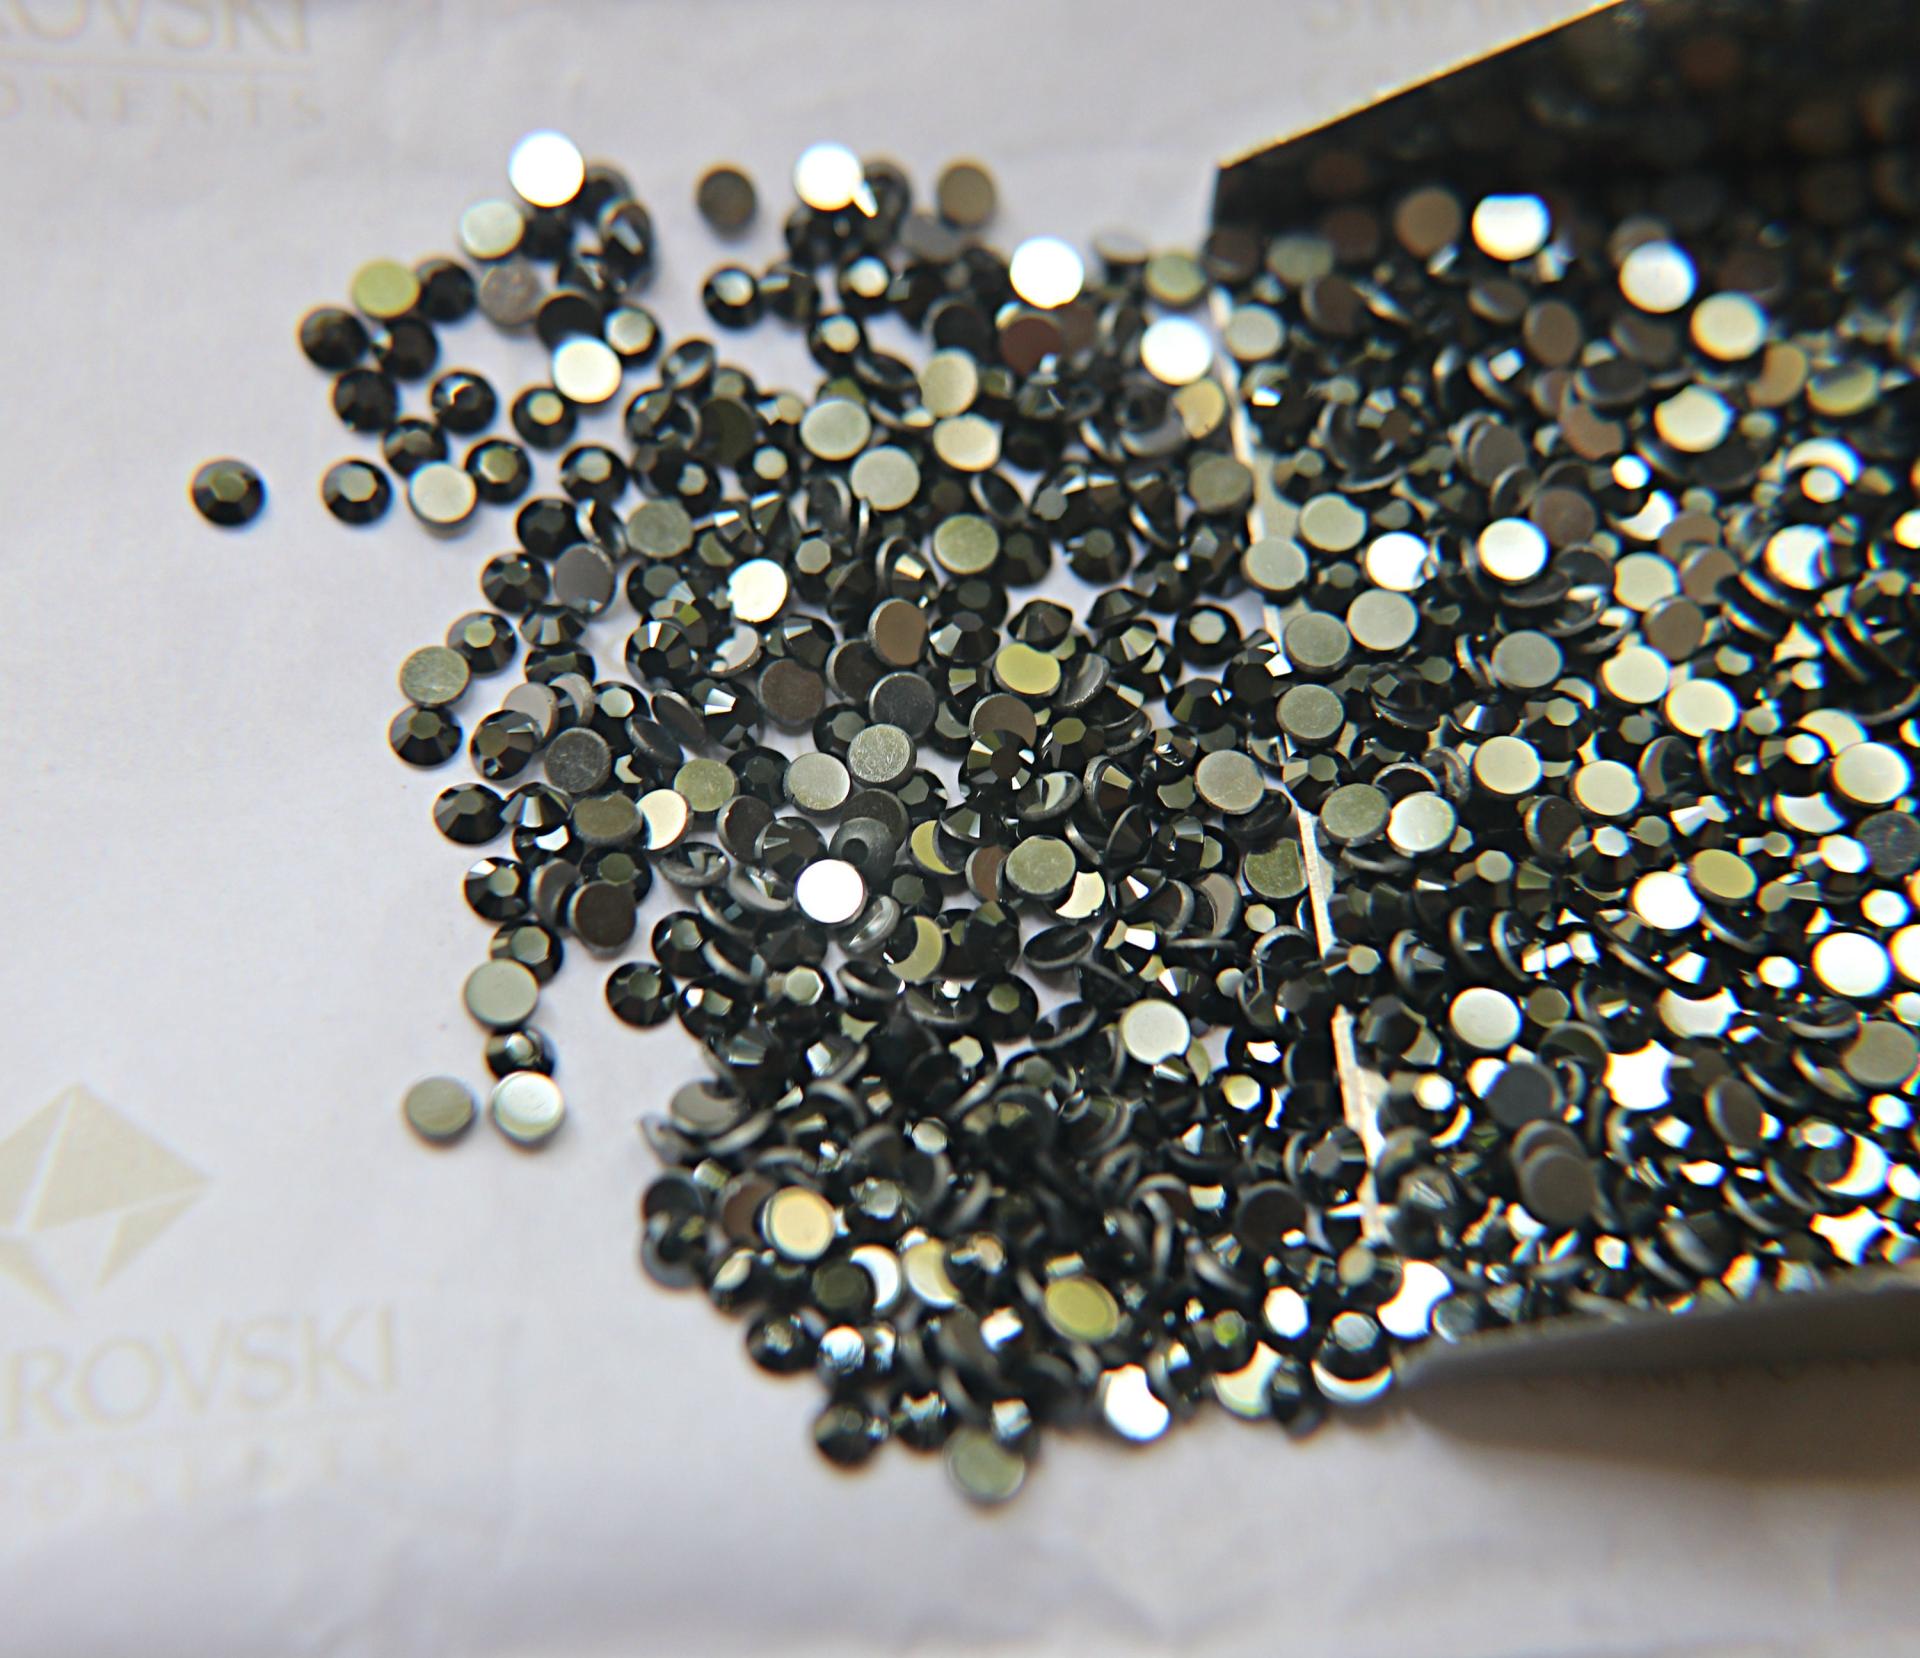 AUTHENTIC Swarovski Crystals Jet Black for NAILS, Crafts, Phone